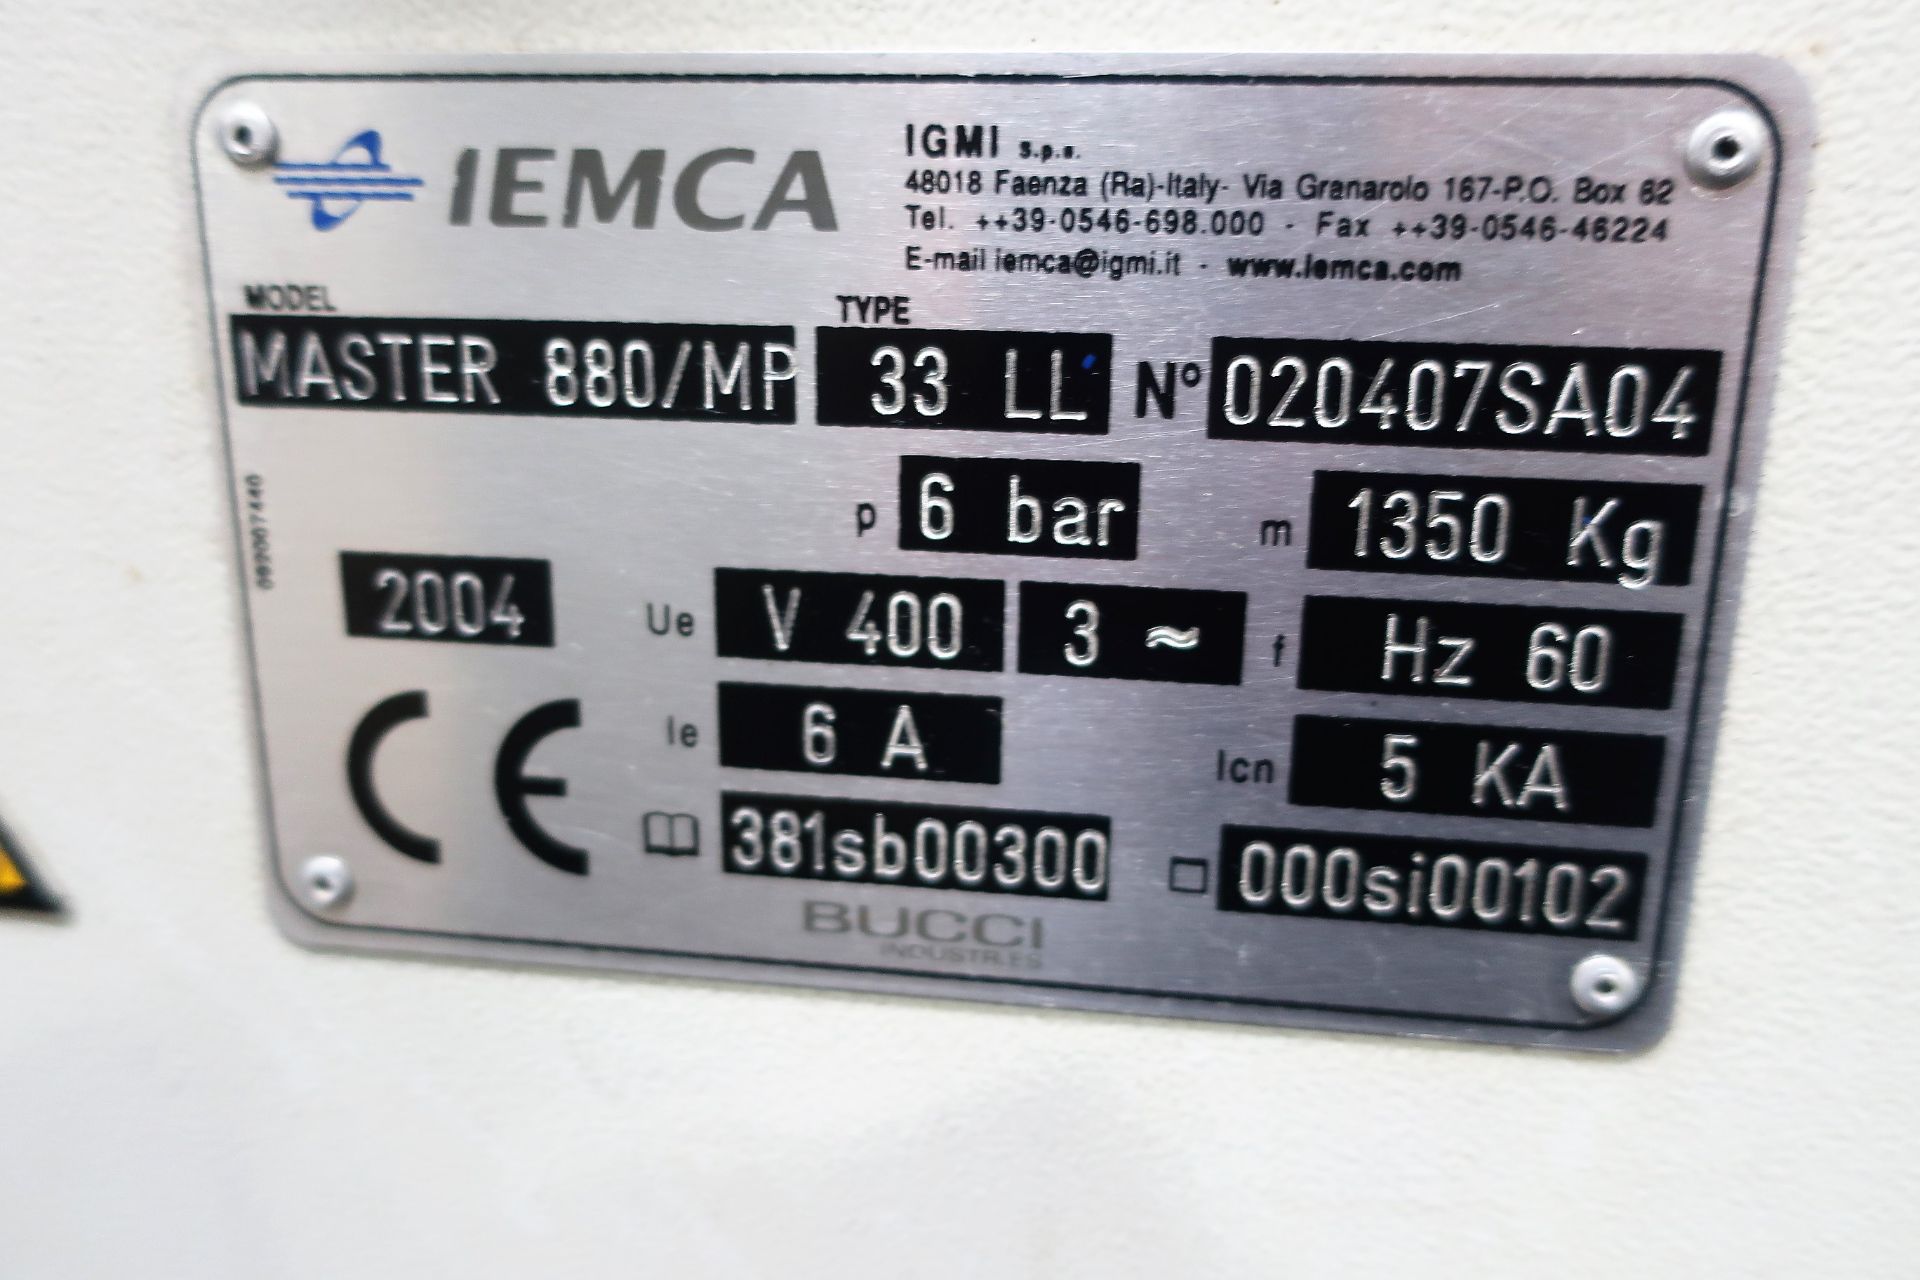 3" CAP IEMCA MASTER 880/MP-E MAGAZINE TYPE BAR FEEDER, S/N 020407SA04, NEW 2004 - Image 6 of 6